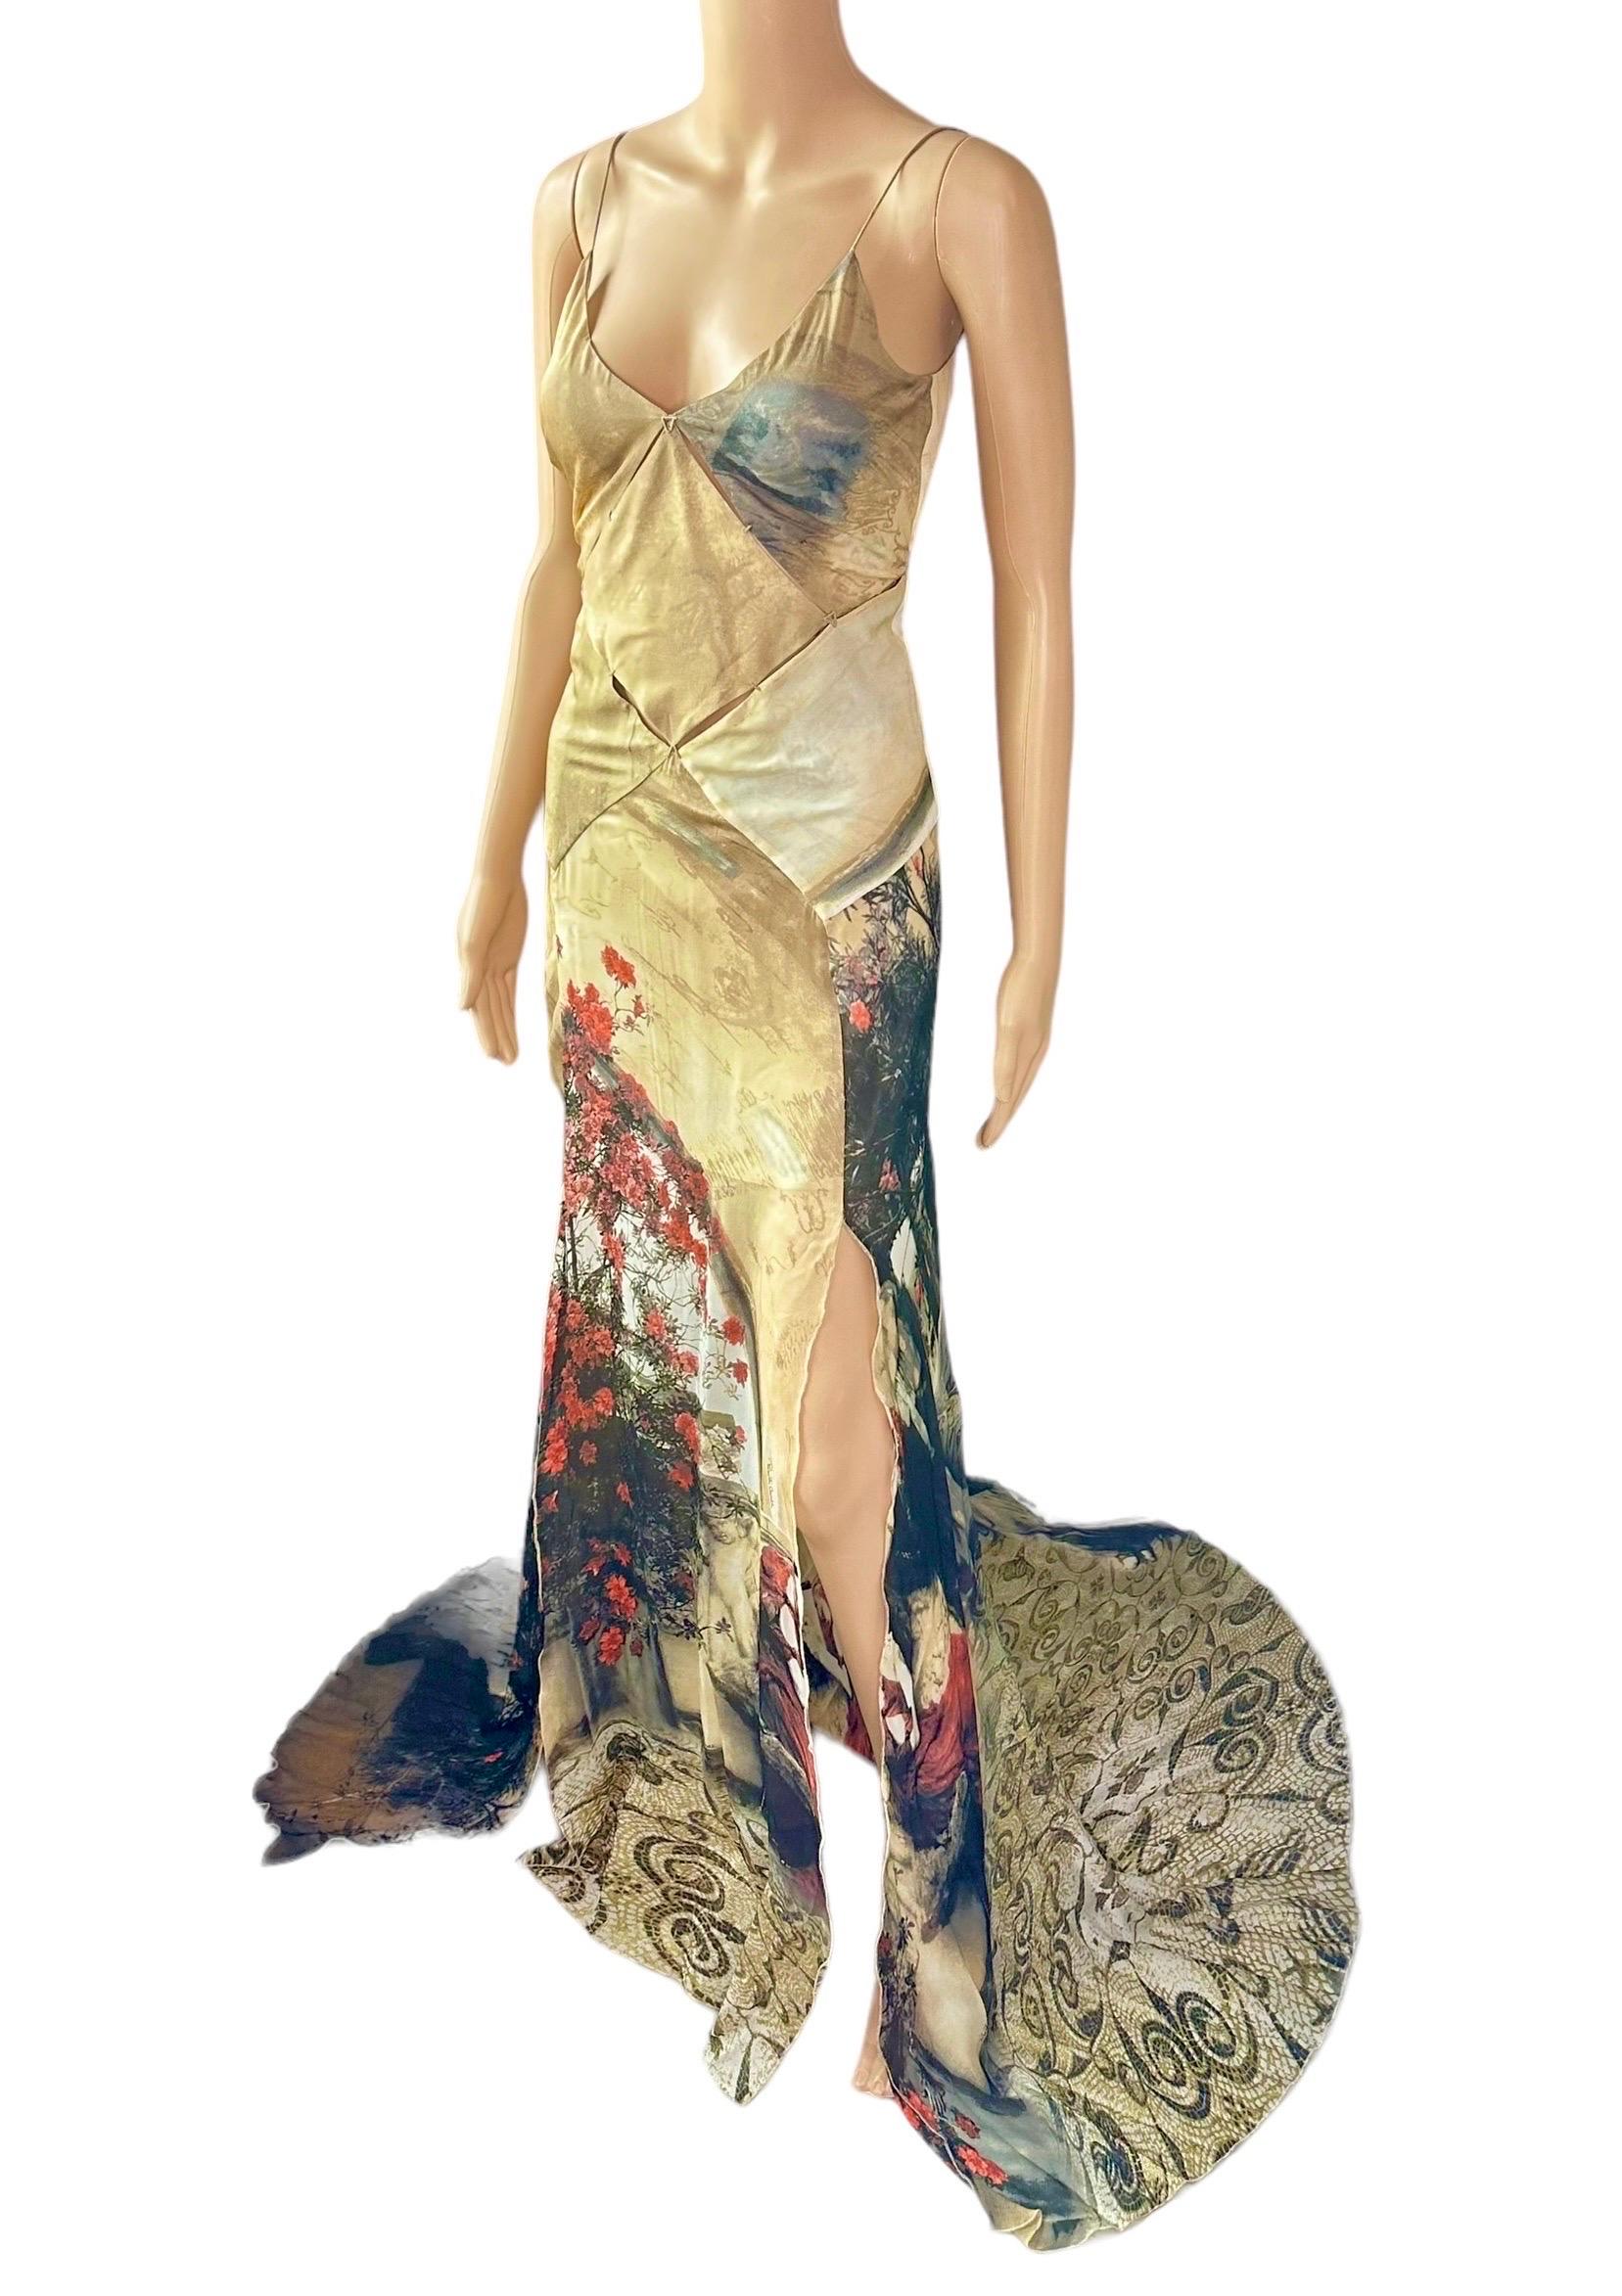 Roberto Cavalli S/S 2004 Runway Cutout High Slit Silk Slip Evening Dress Gown For Sale 8